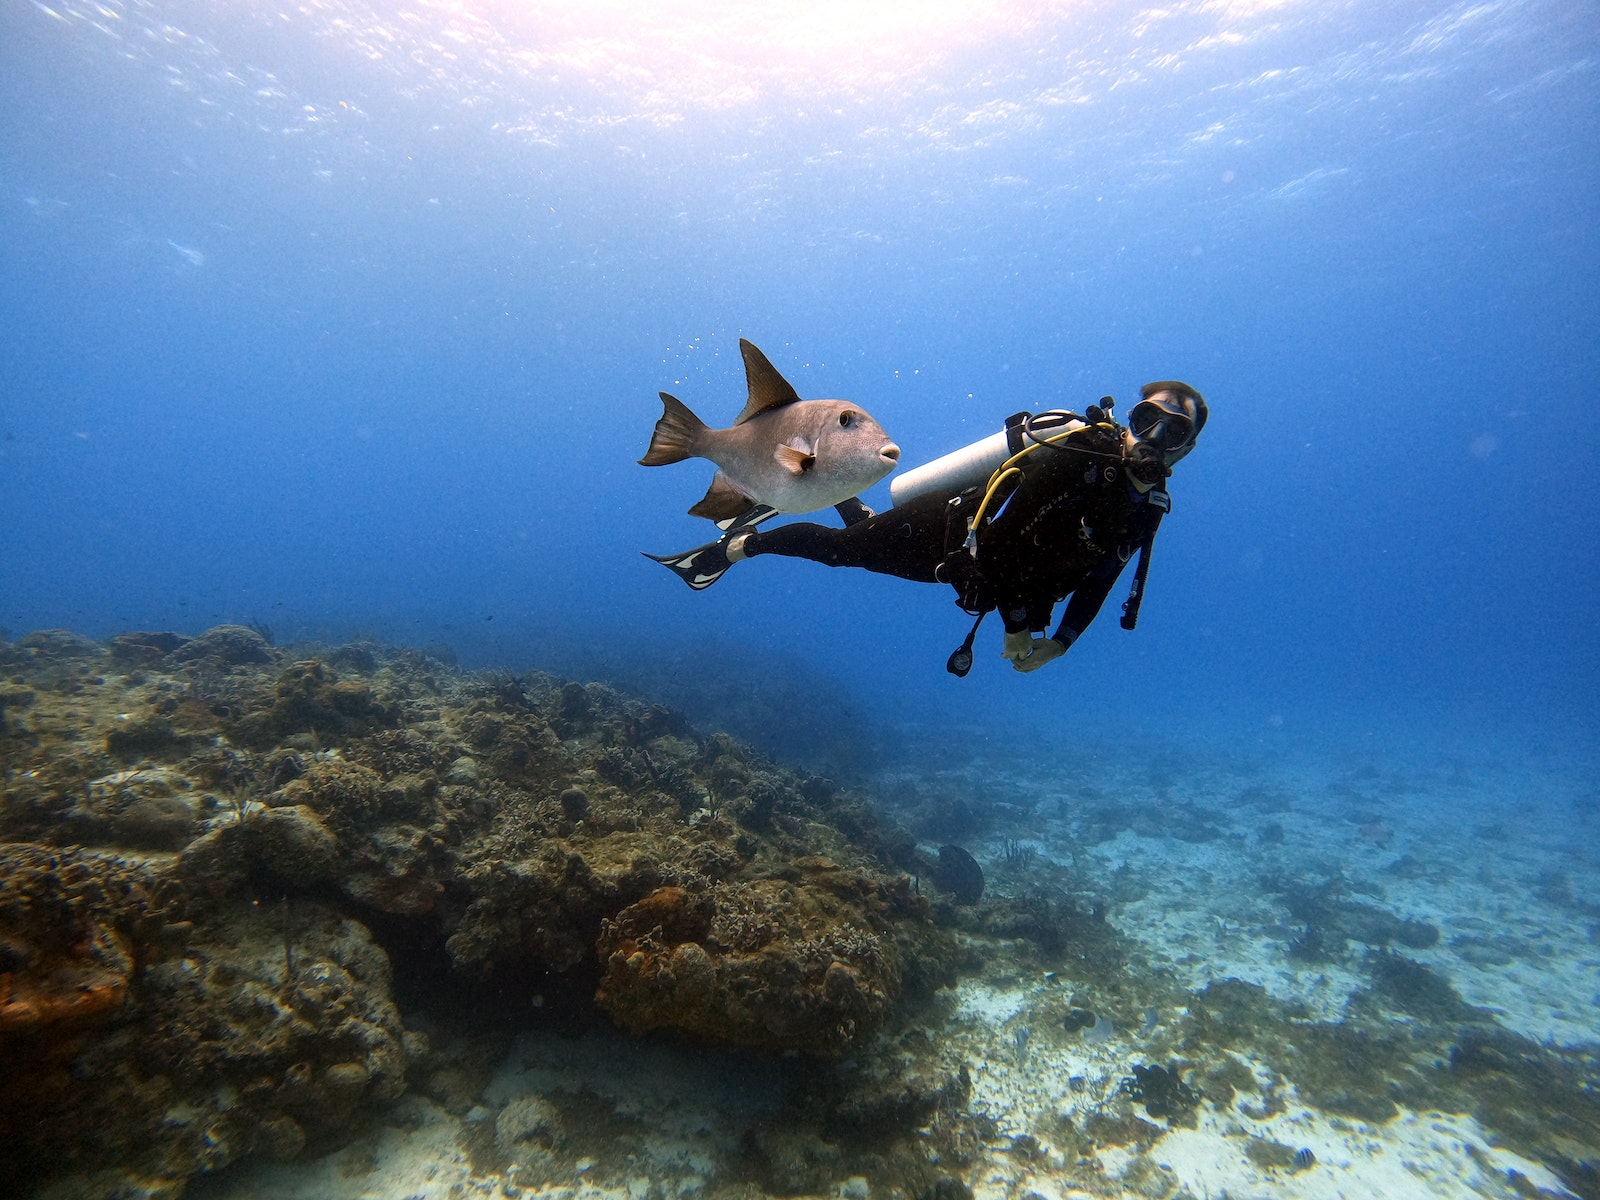 Scuba Diver Swimming with Fish